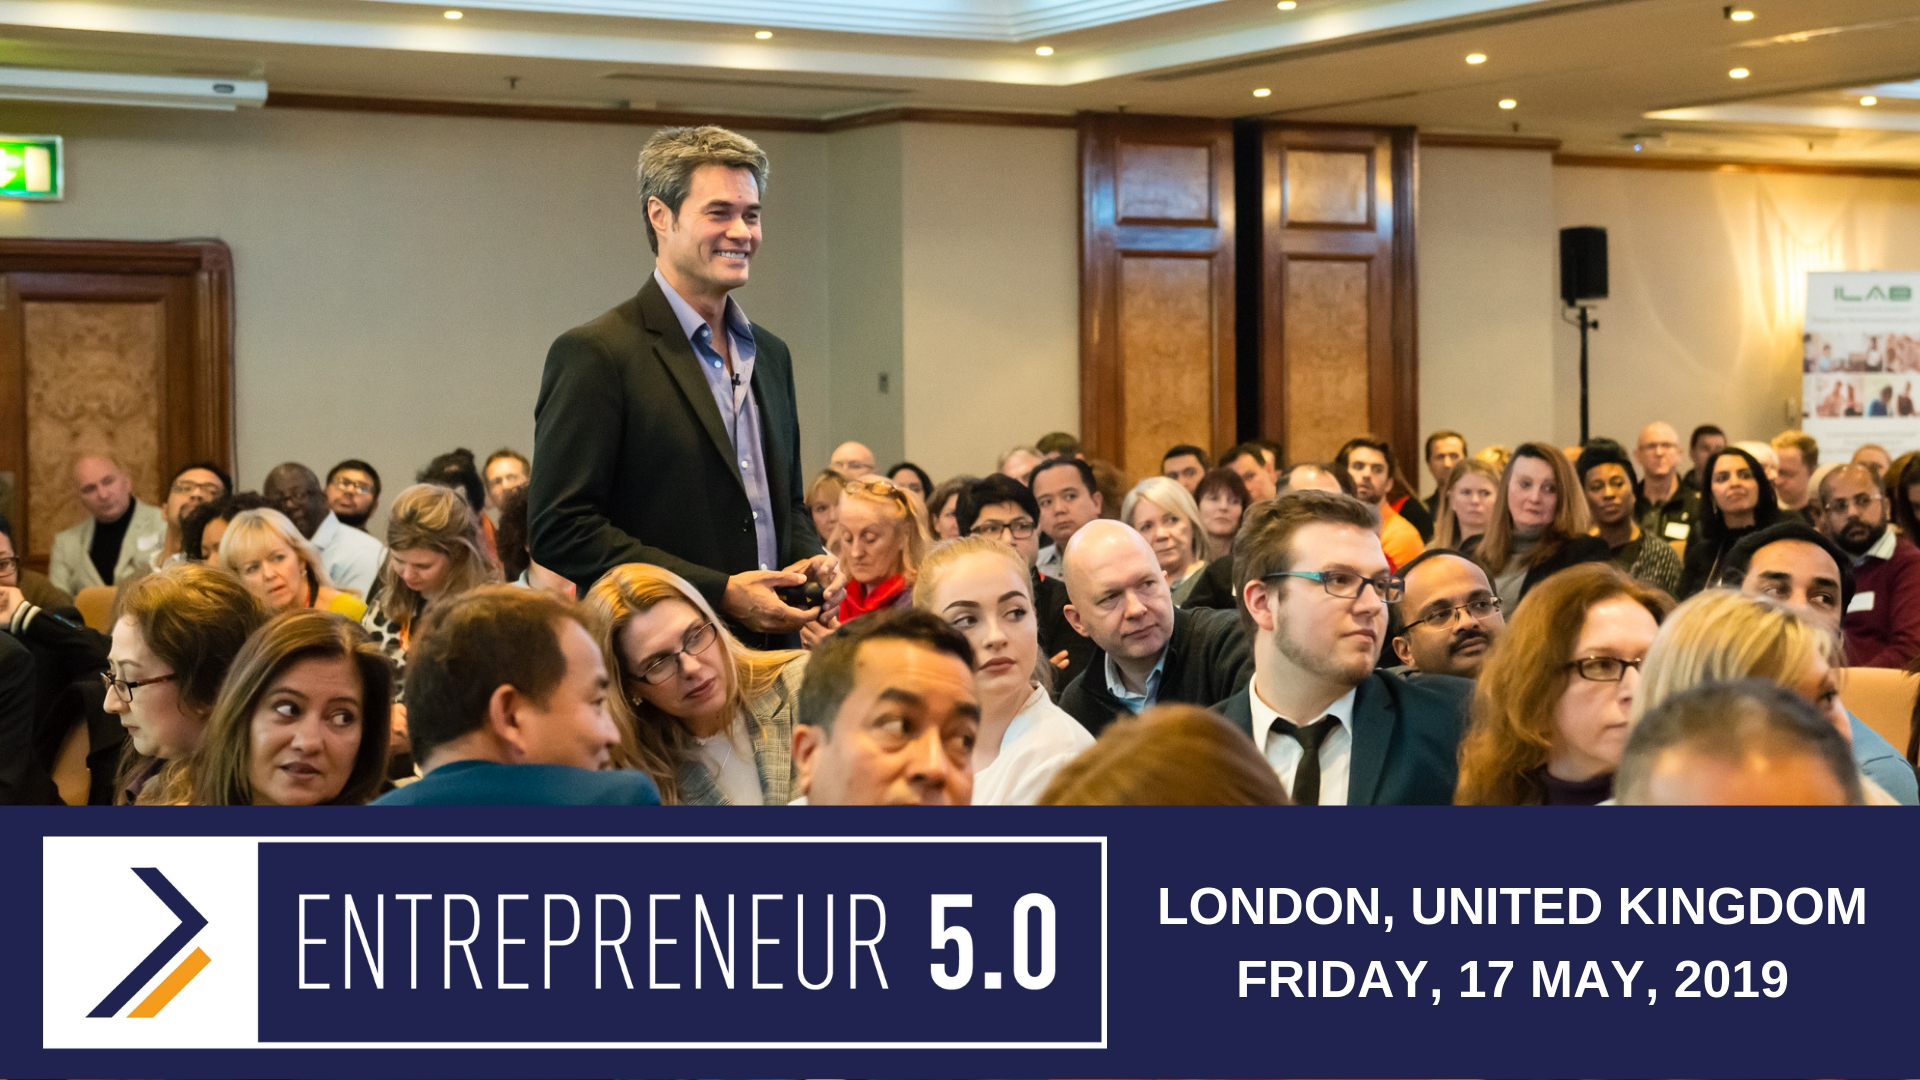 London Entrepreneur 5.0, London, United Kingdom